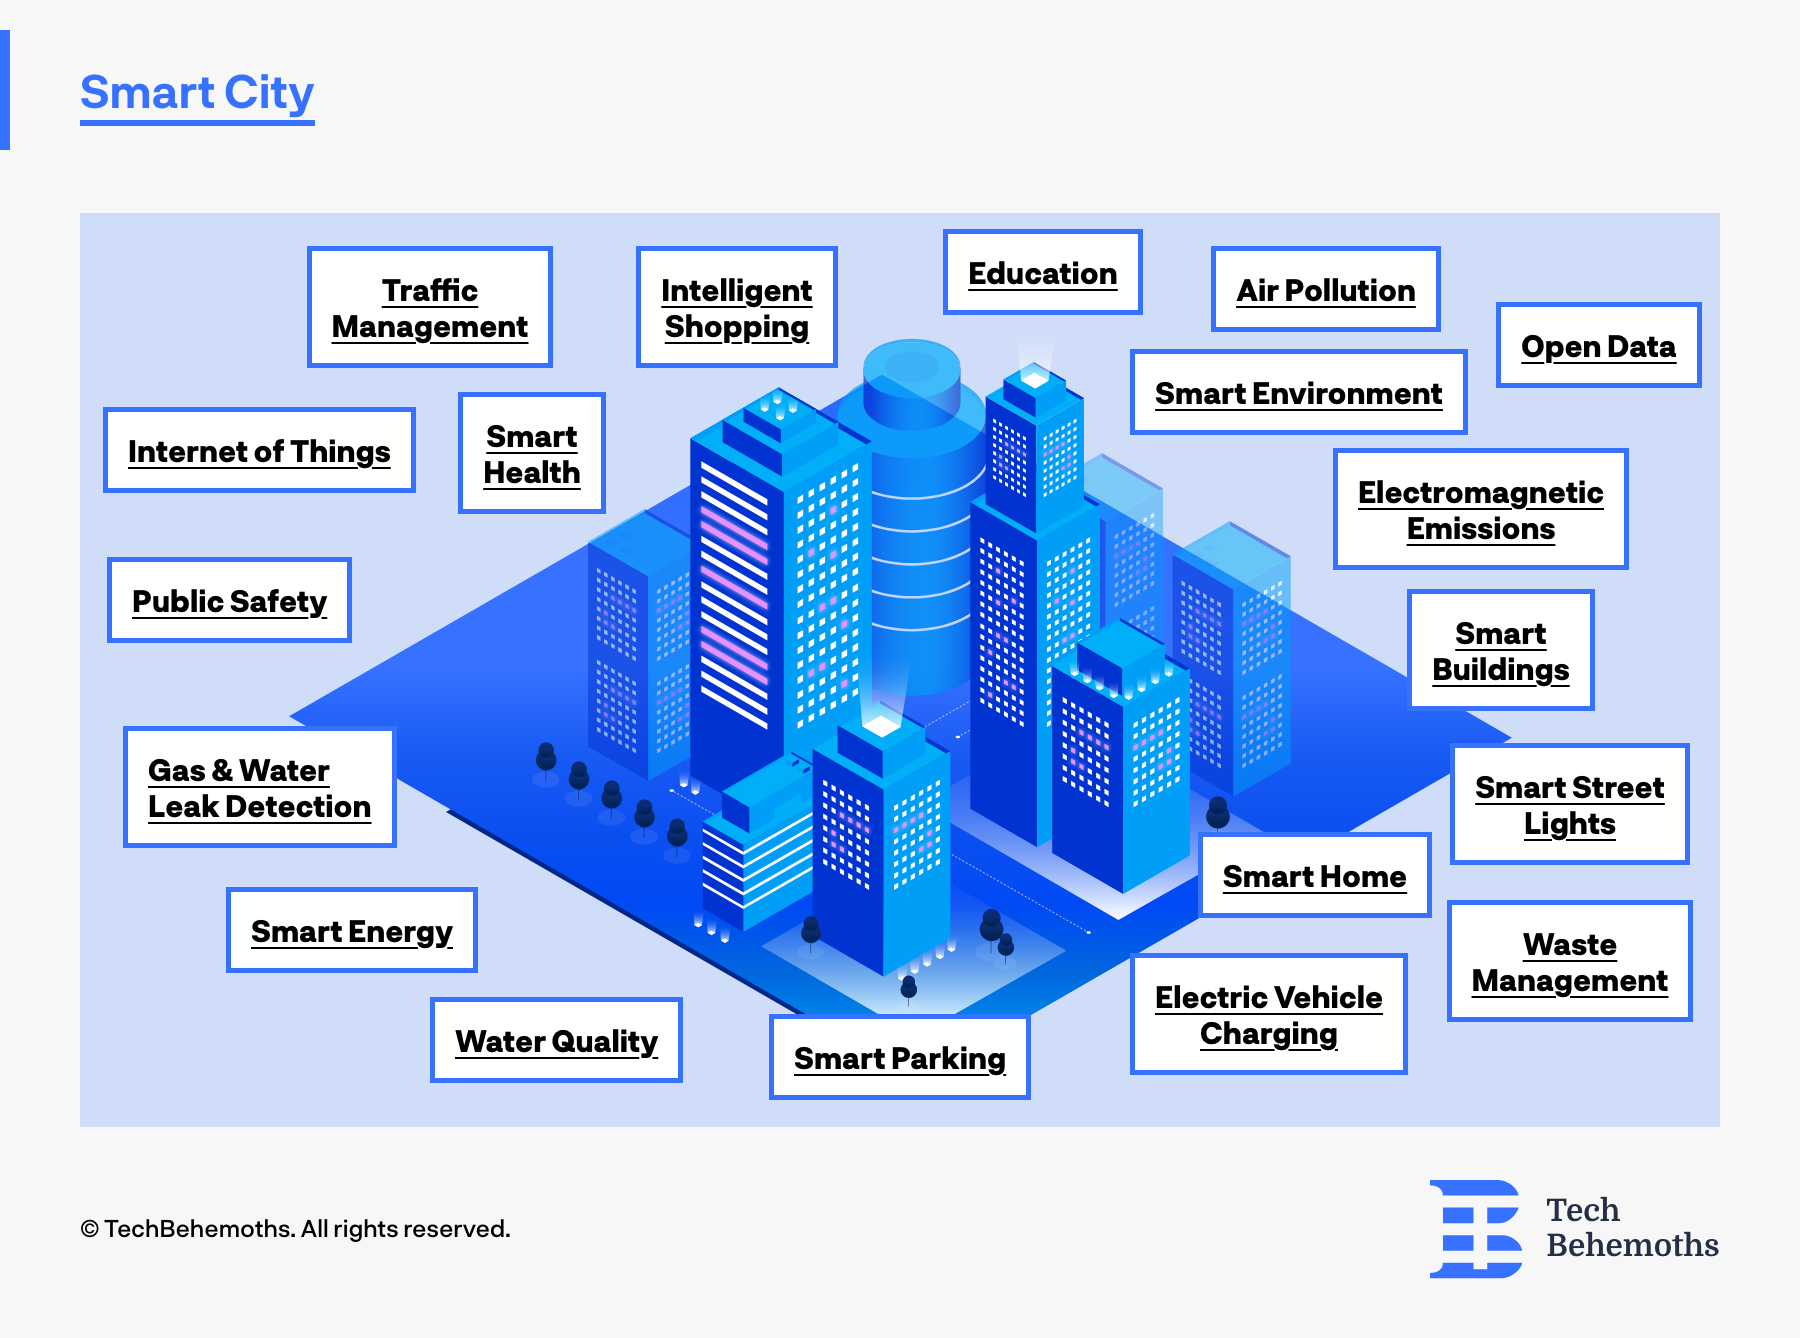 smart-city